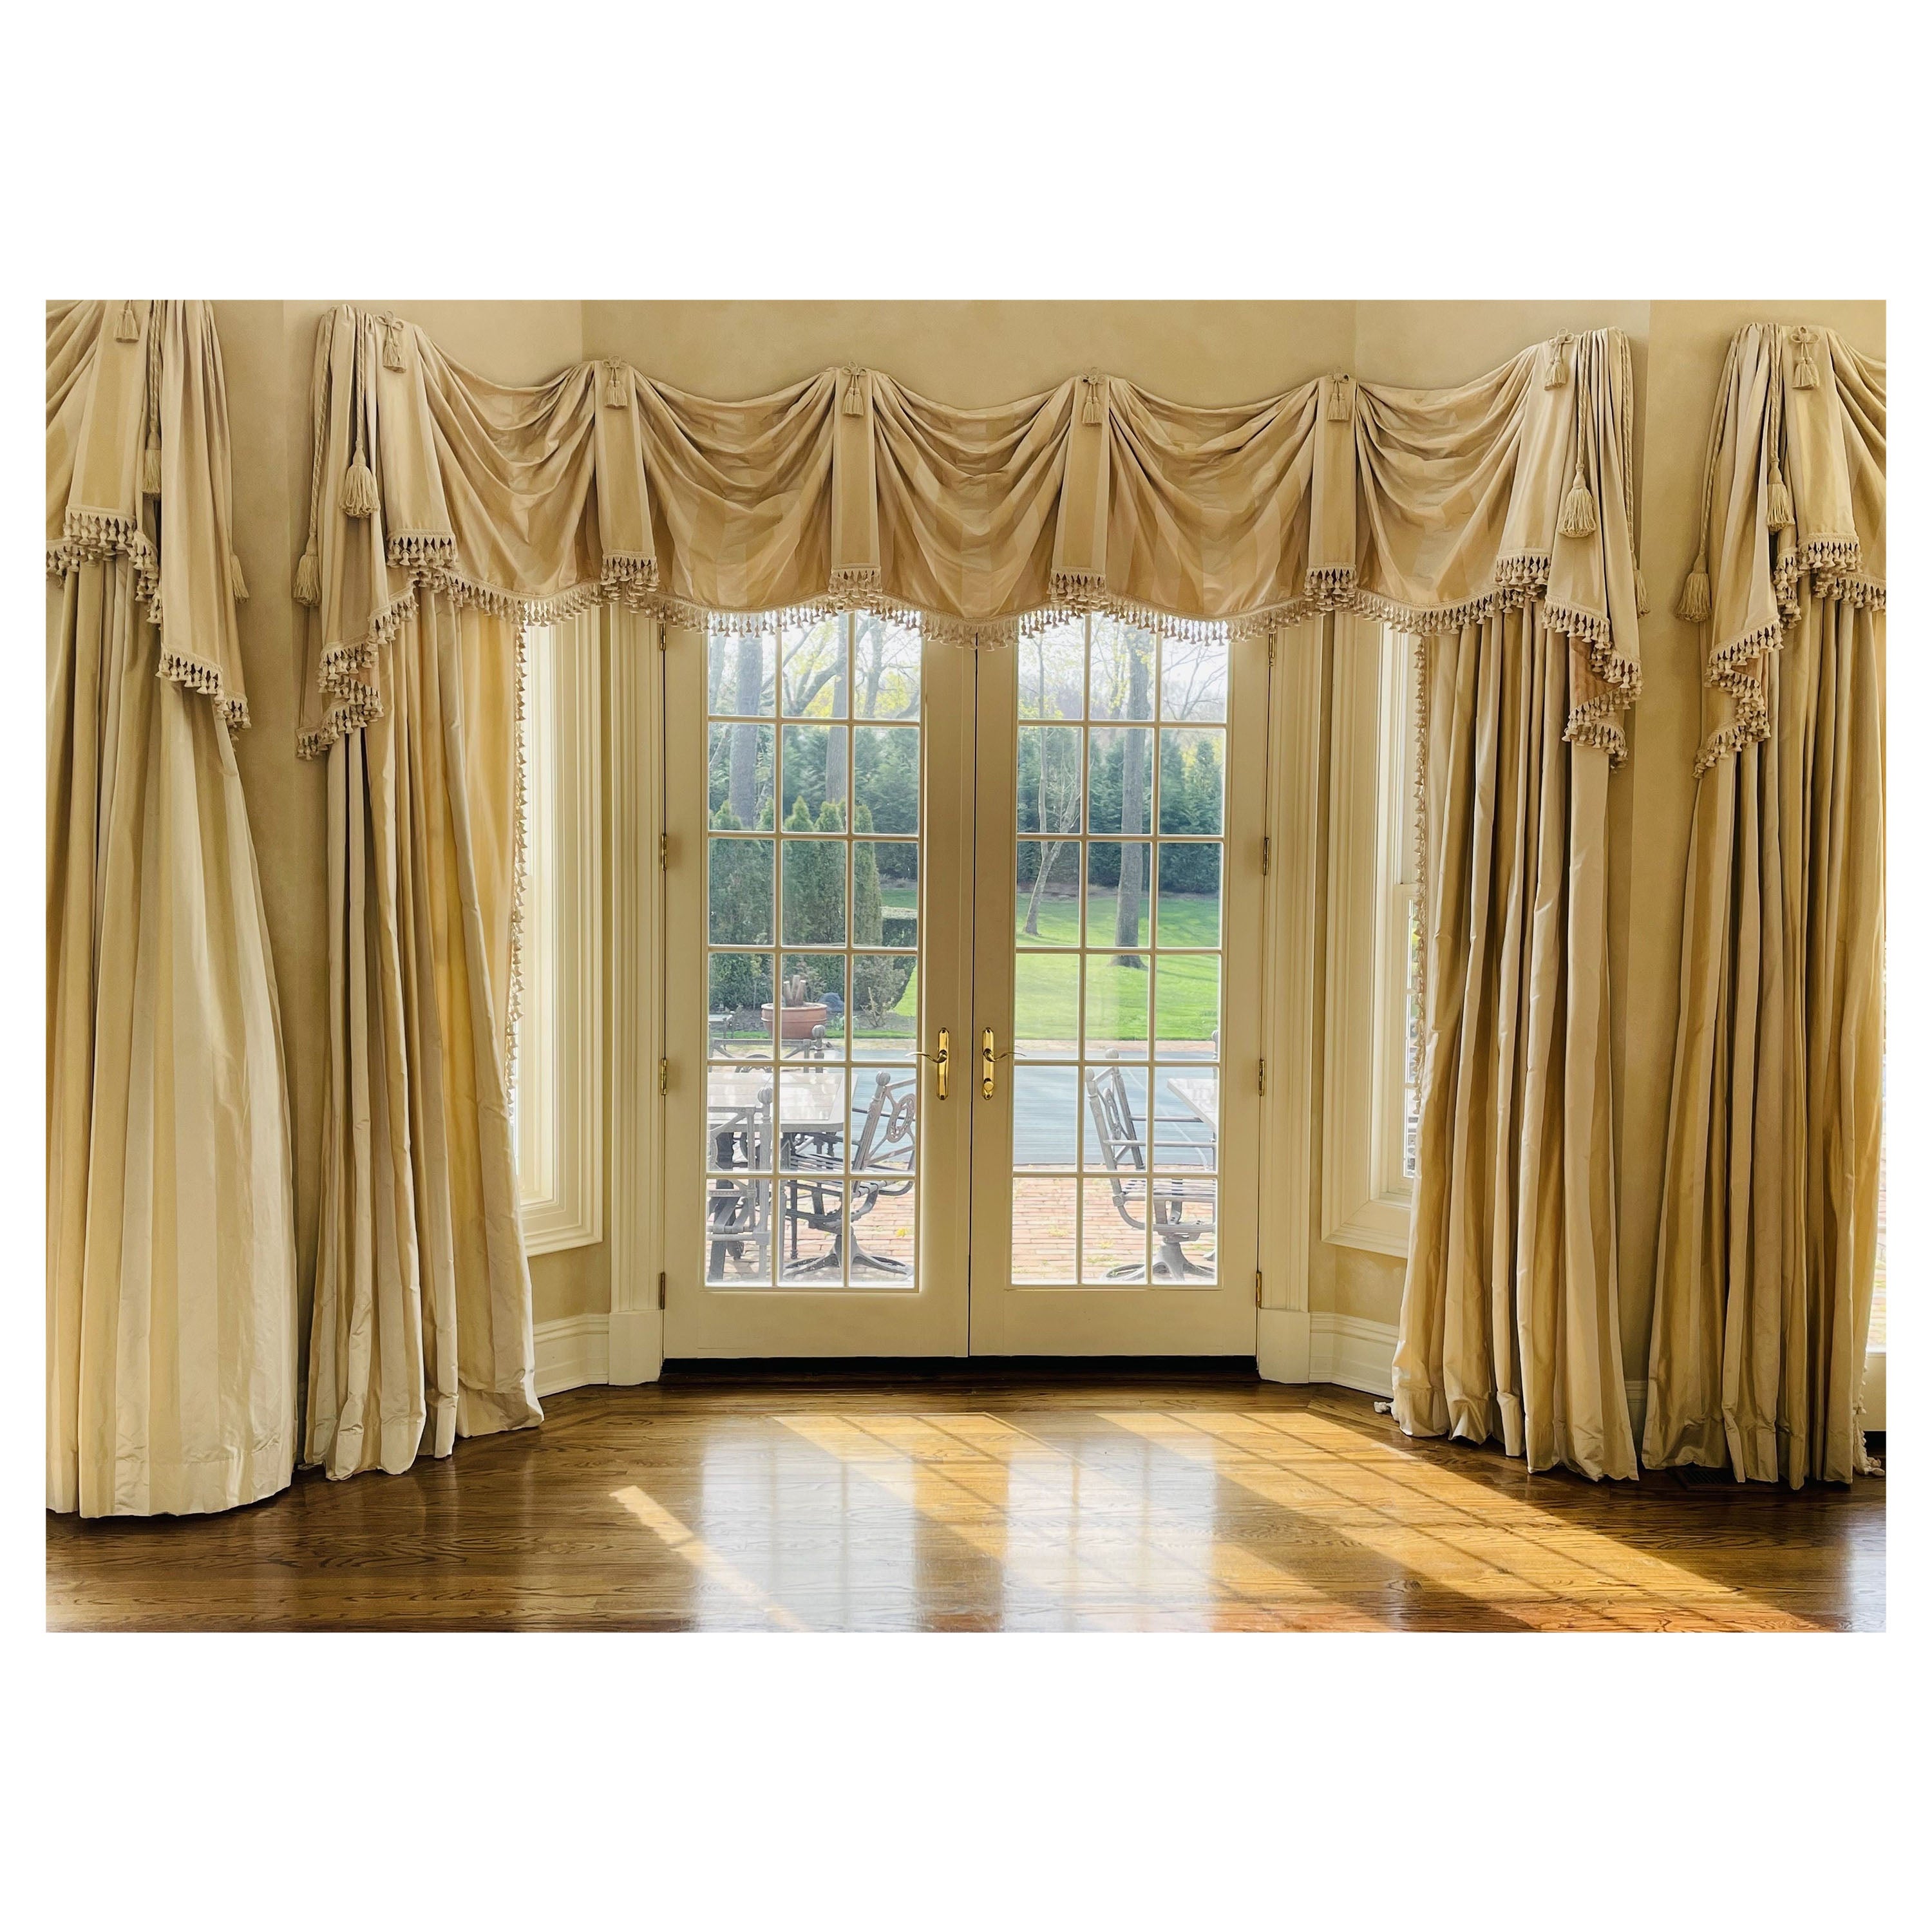 Set of Scalamandre Drapes, Curtains or Window Treatments, Linen